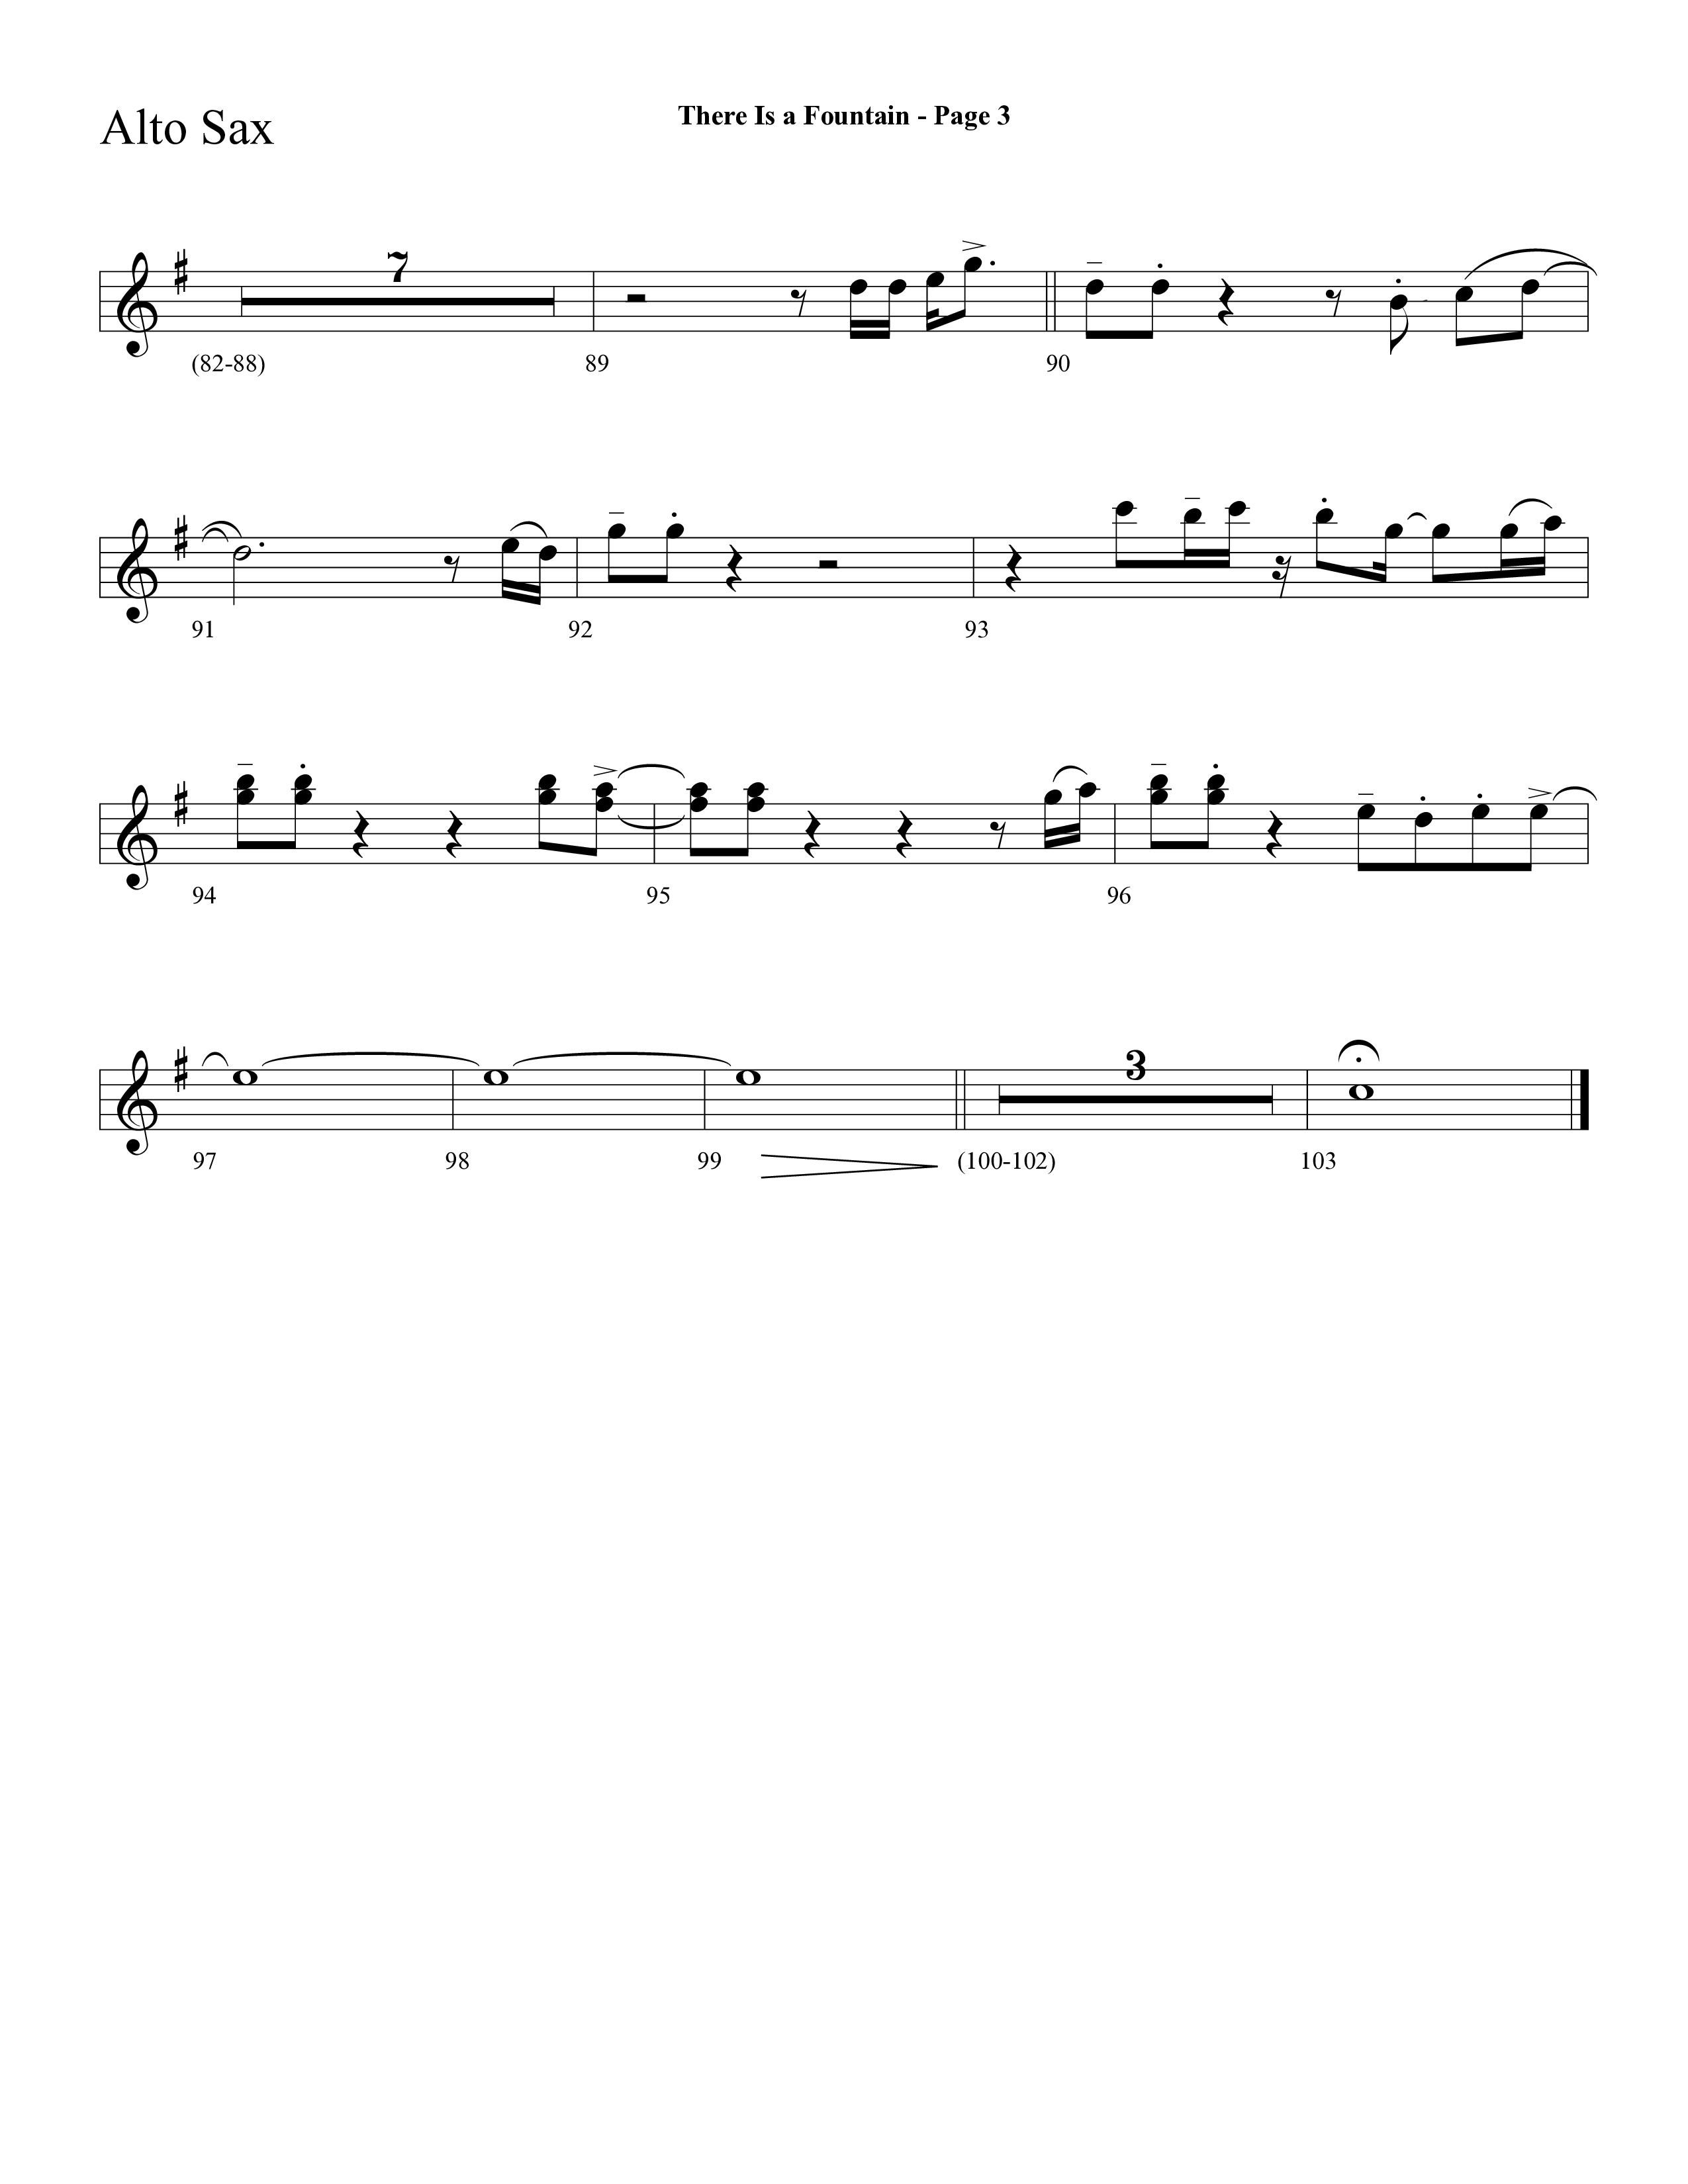 There Is A Fountain (Choral Anthem SATB) Alto Sax (Lifeway Choral / Arr. Mark Willard / Orch. Stephen K. Hand)